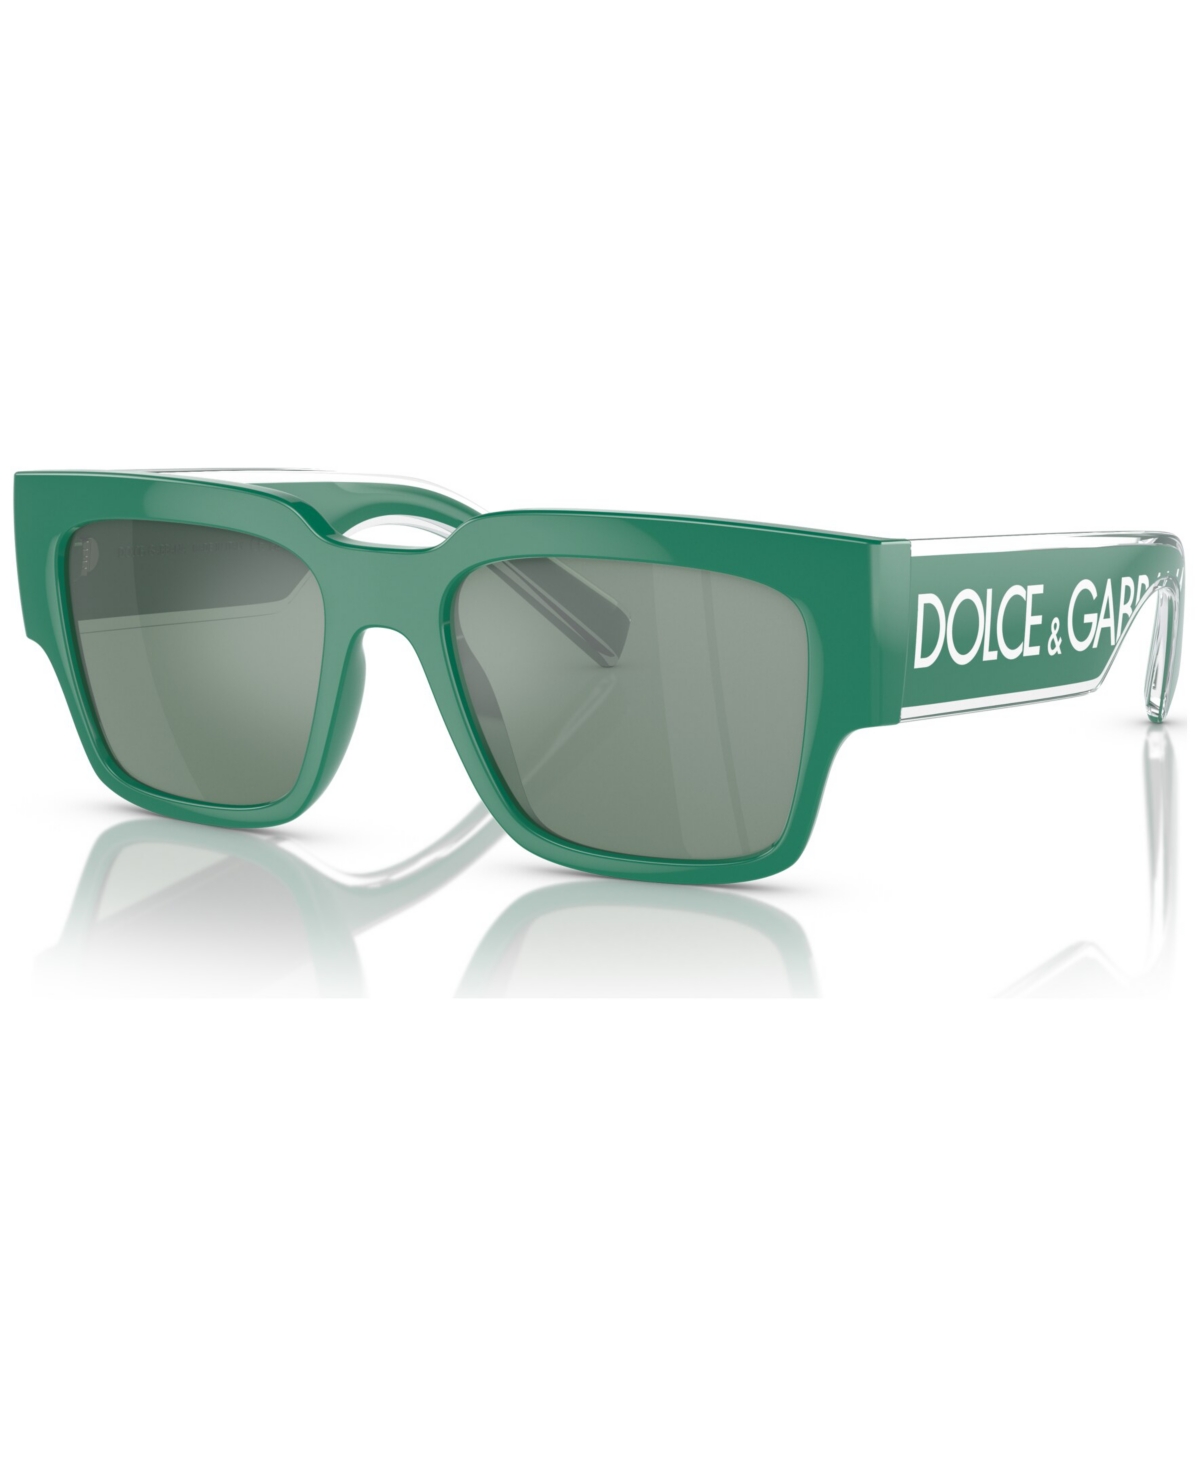 Dolce&Gabbana Men's Sunglasses, DG6184 - Green